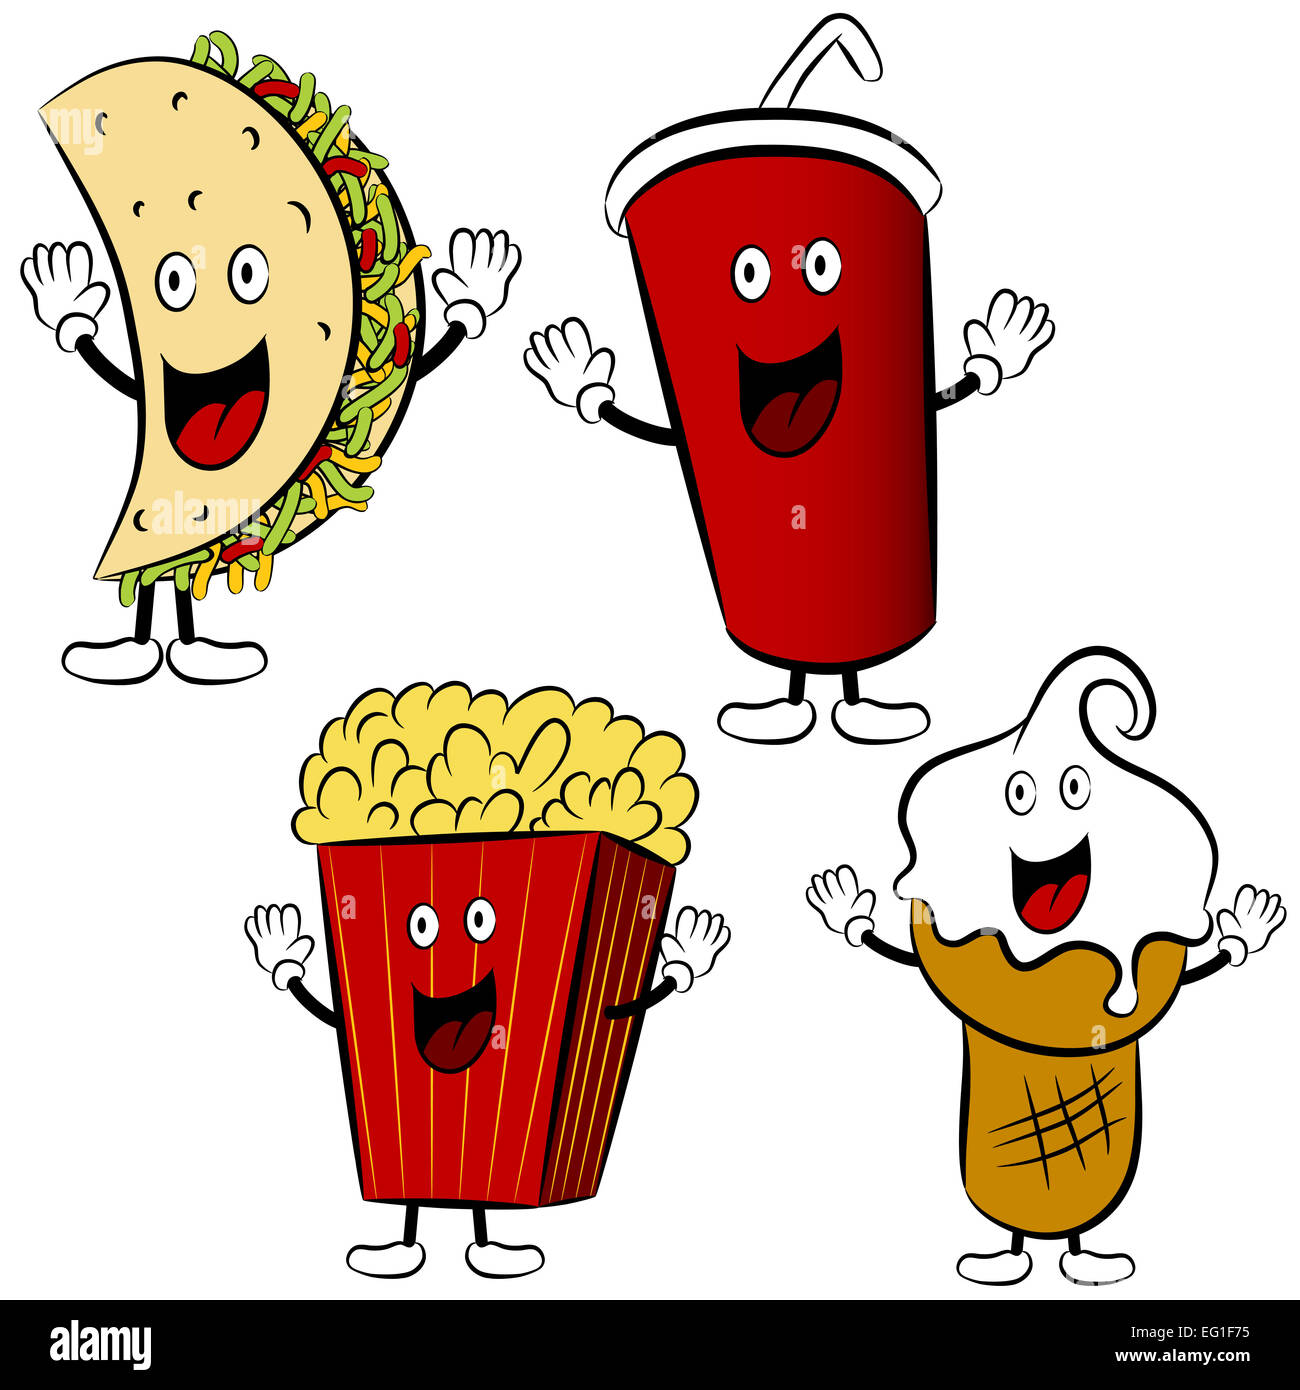 An image of a fast food taco, soda, popcorn and ice cream cartoon mascots. Stock Photo